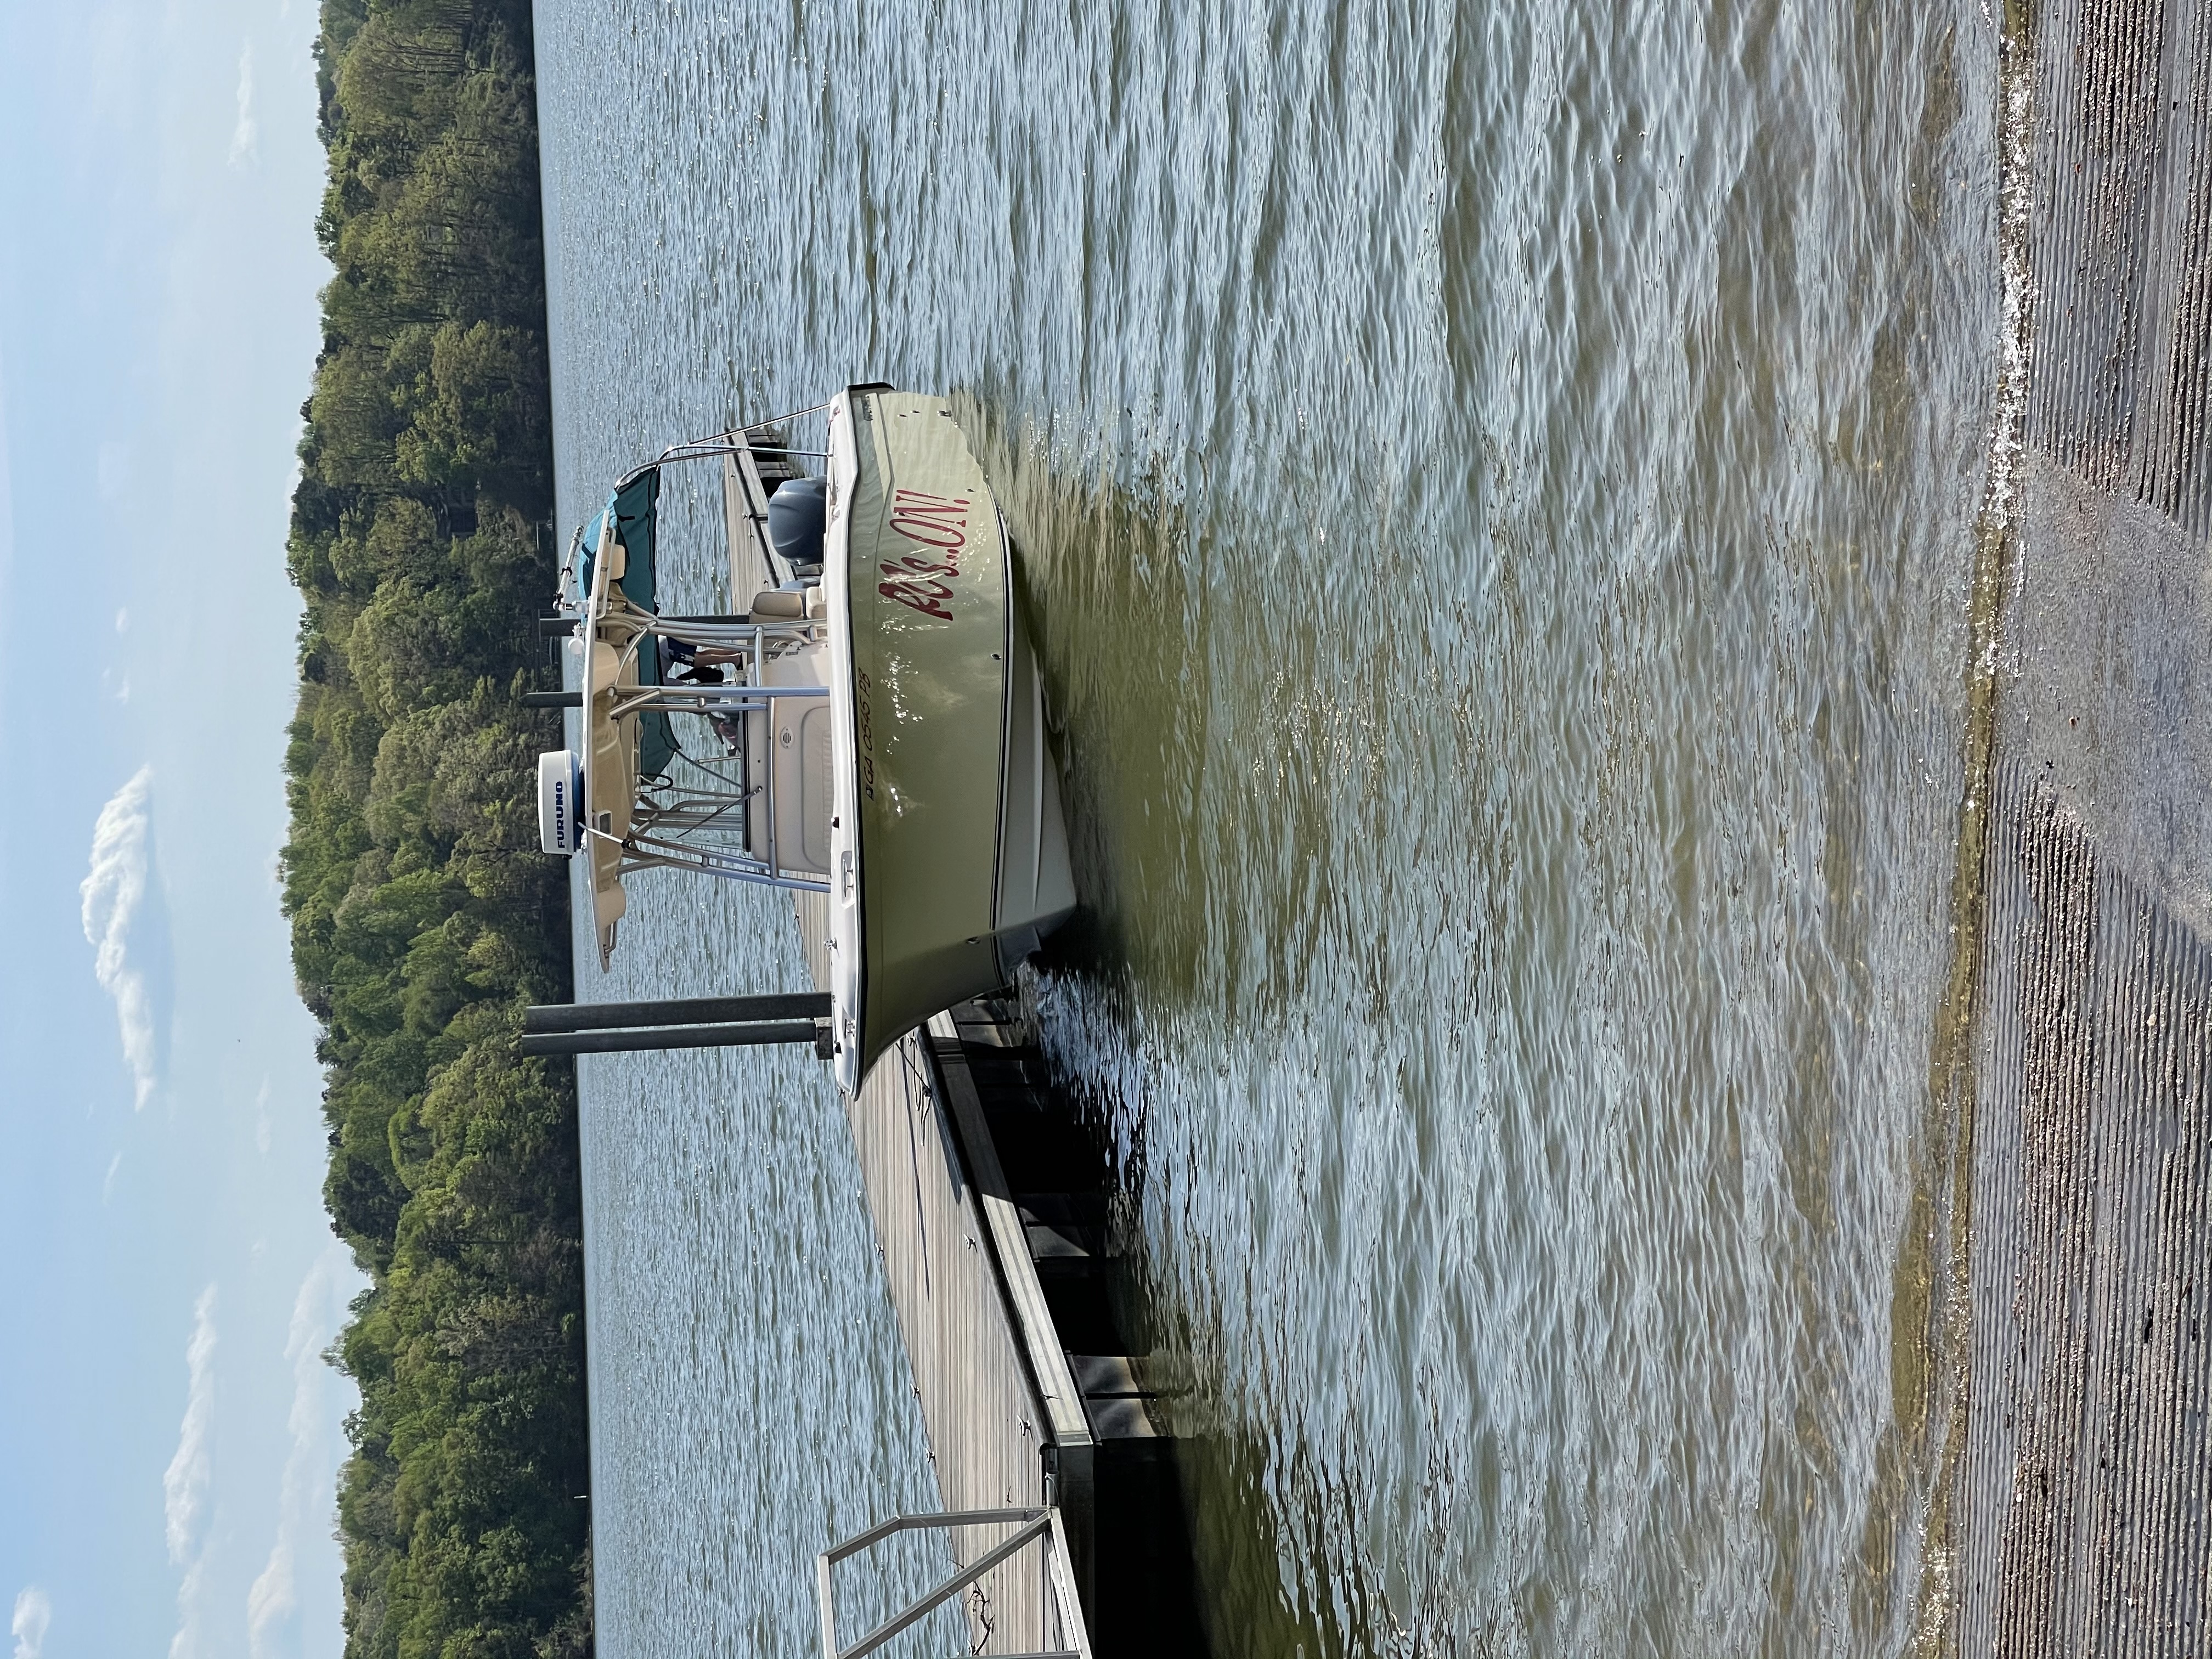 2007 Grady-White 283 Release Power boat for sale in Gainesville, GA - image 12 